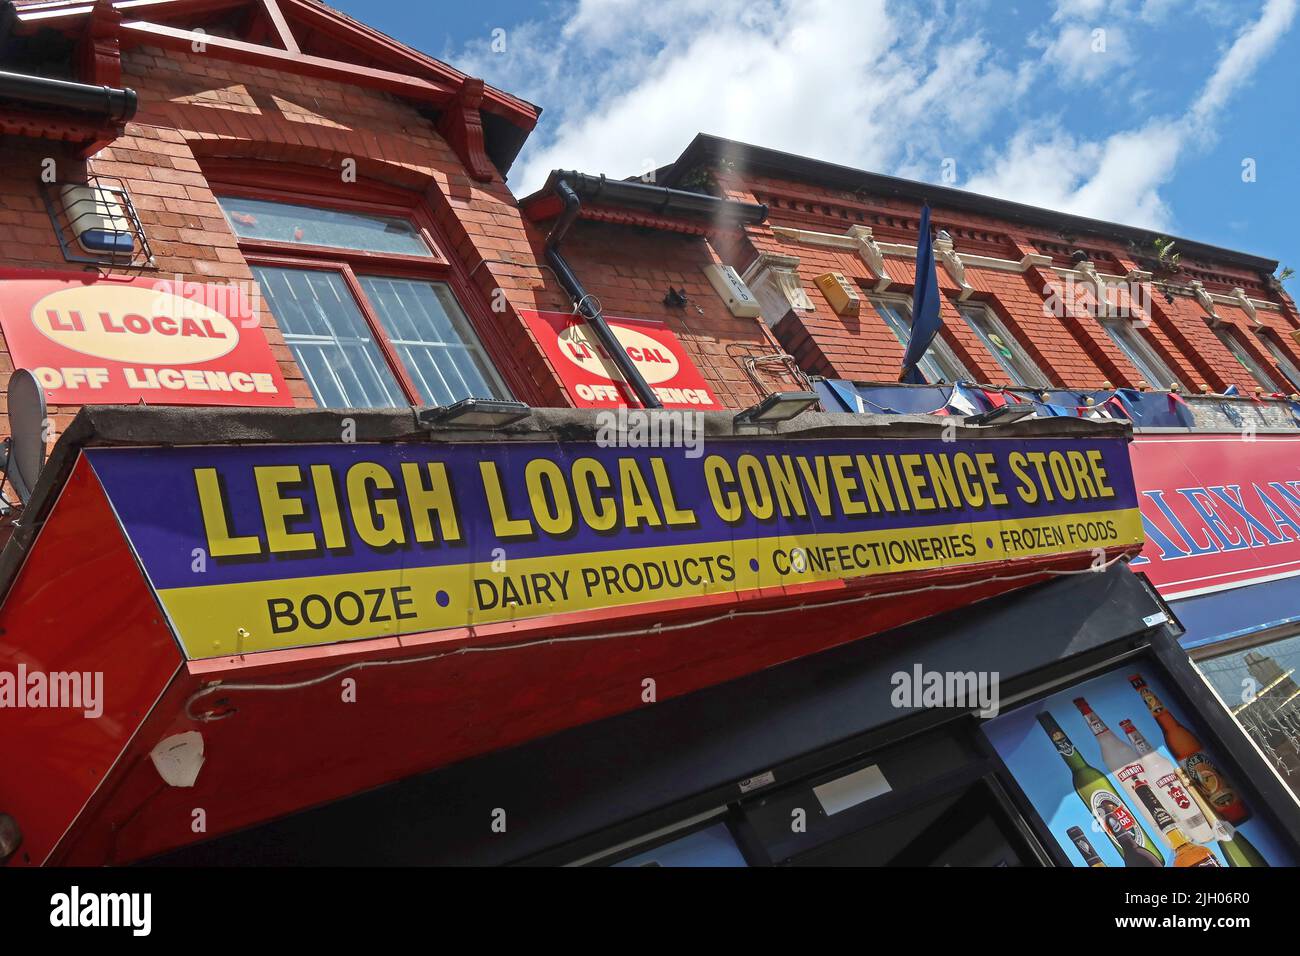 LI local, Leigh local dépanneur, Booze, produits d'agenda, confiseries, aliments surgelés, 20 Railway Rd, Leigh, Angleterre, Royaume-Uni, WN7 4AX Banque D'Images